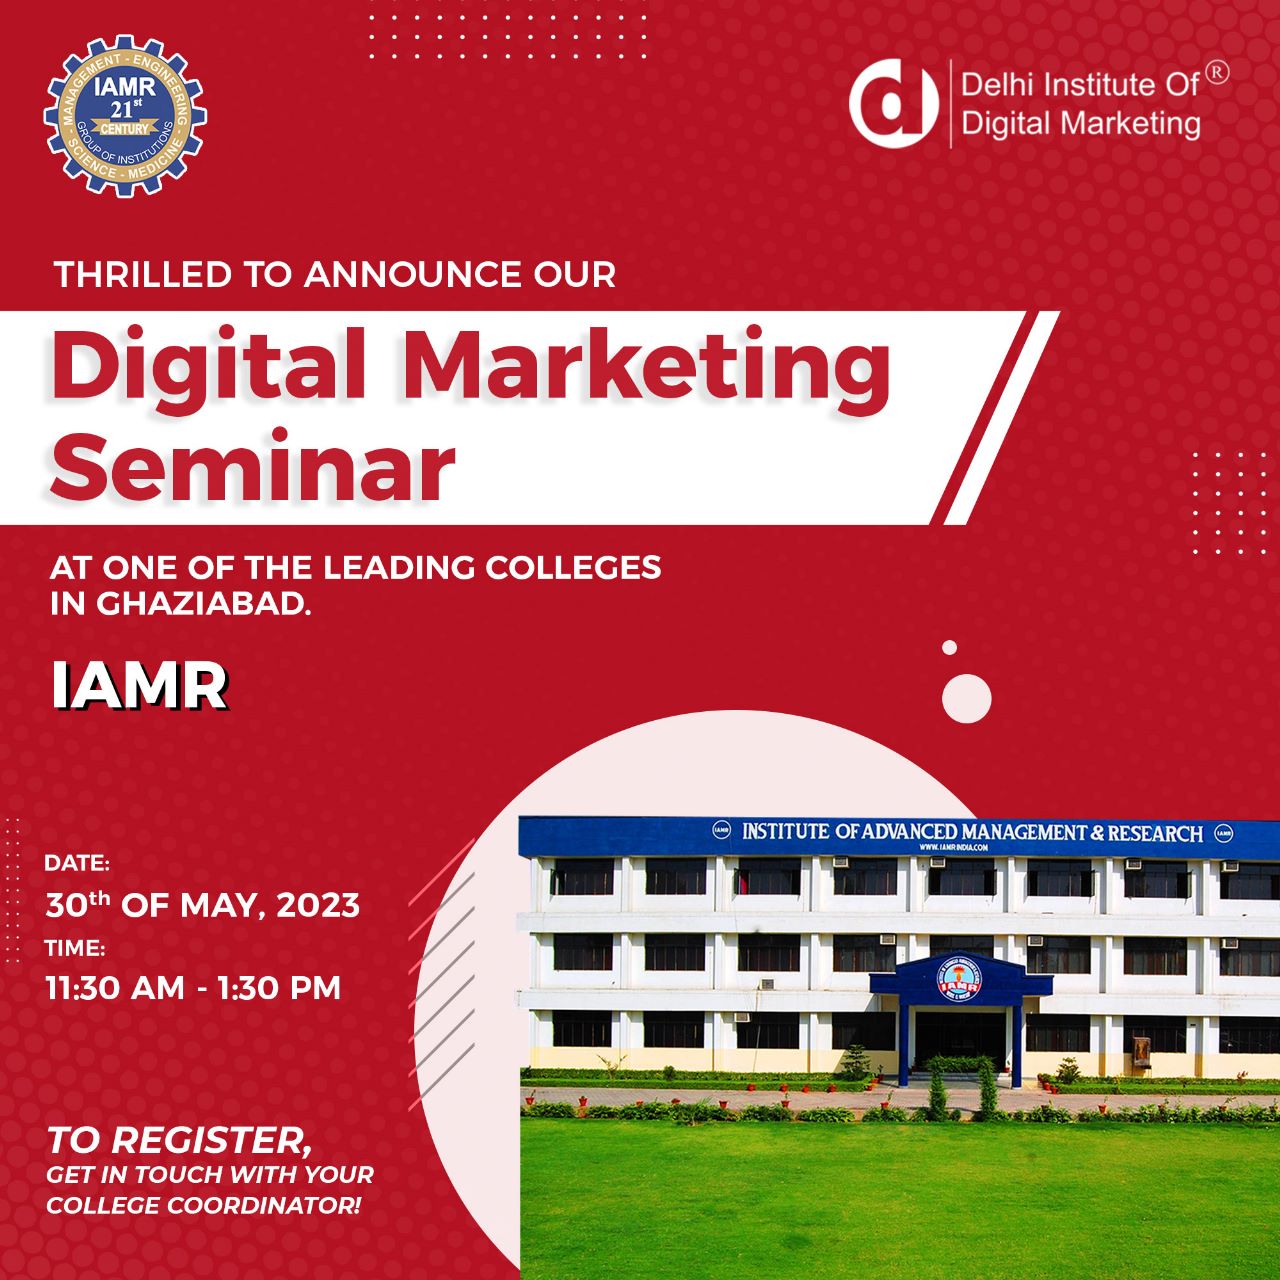 DIDM will conduct a digital marketing seminar at IAMR, Ghaziabad